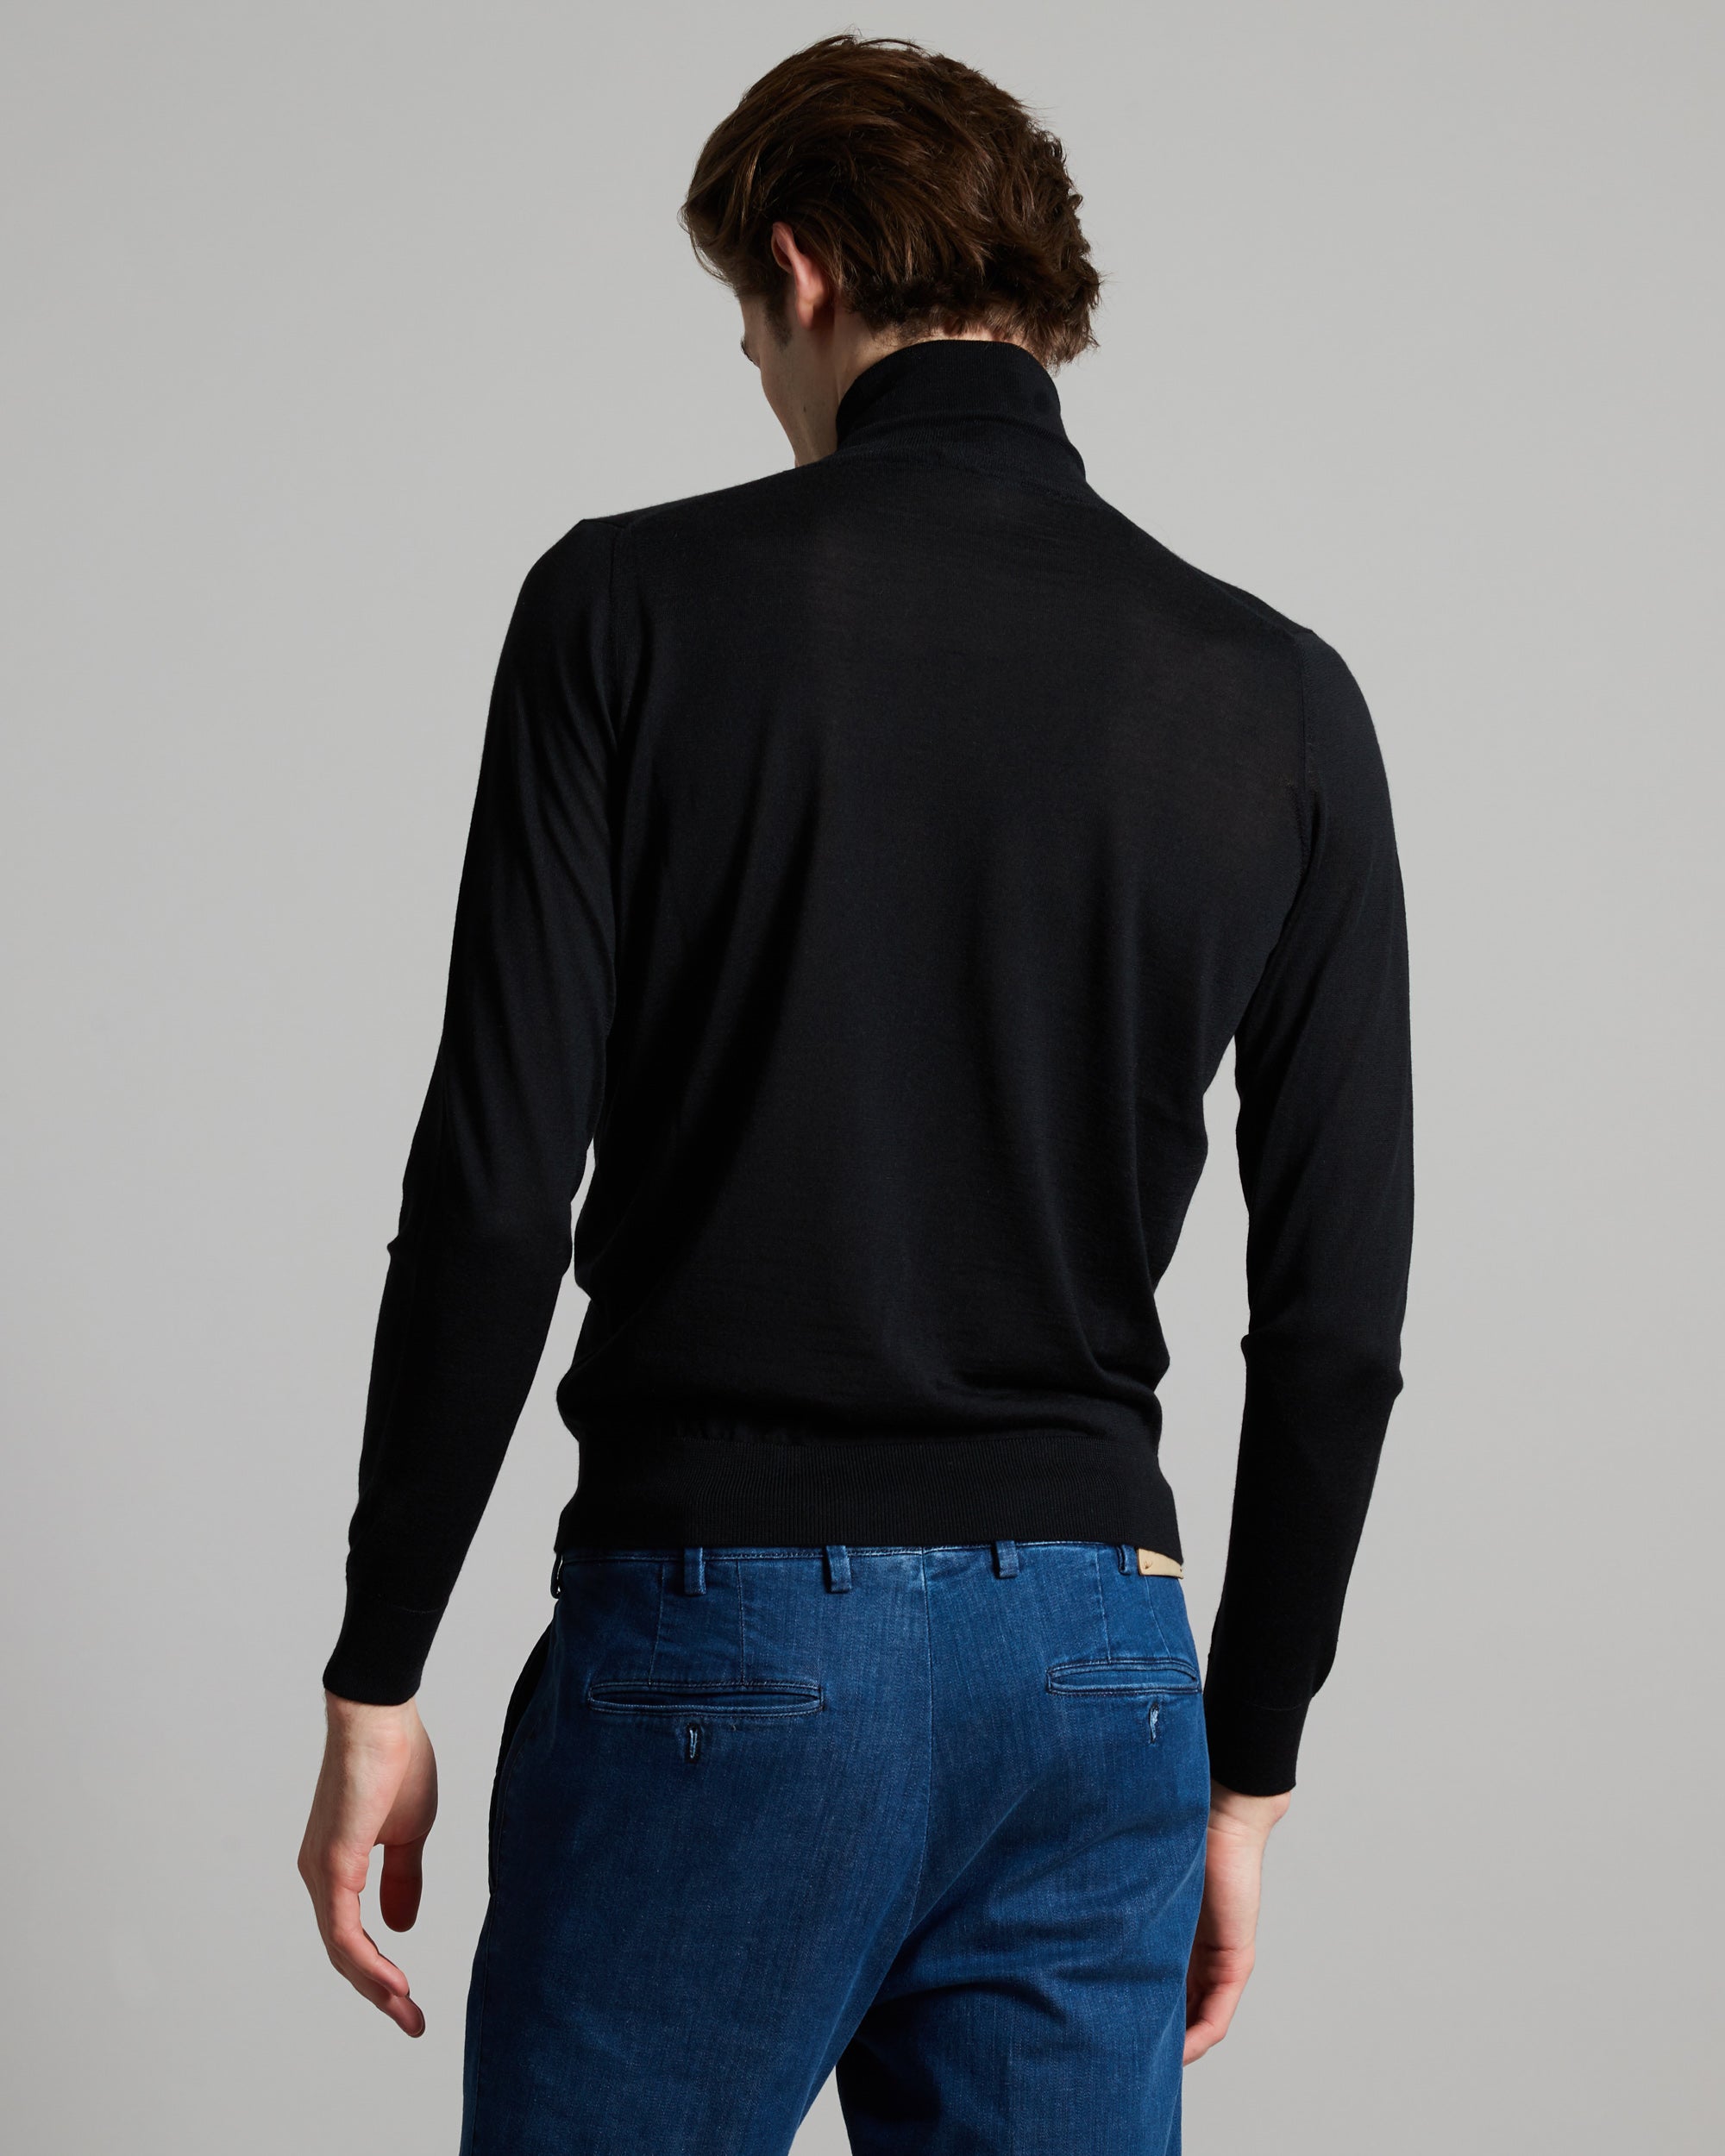 Black cashmere and silk men's turtleneck sweater